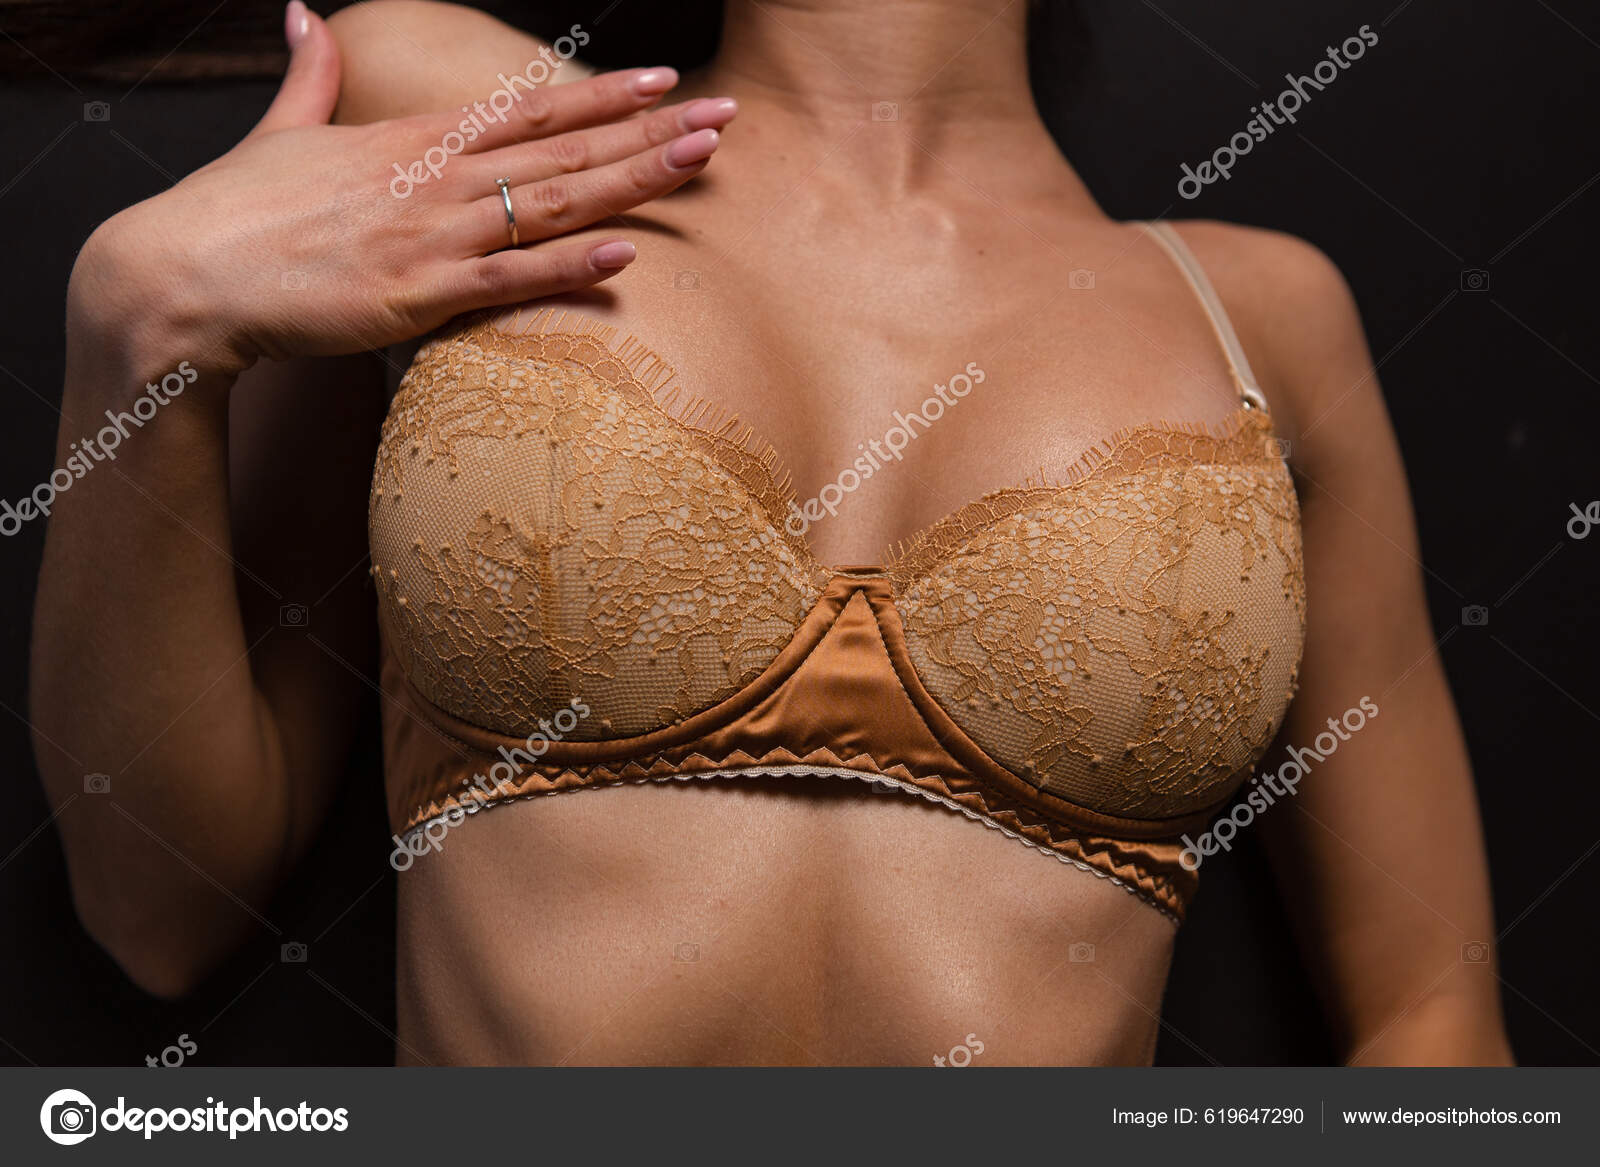 https://st5.depositphotos.com/9149834/61964/i/1600/depositphotos_619647290-stock-photo-beautiful-woman-tanned-athletic-body.jpg